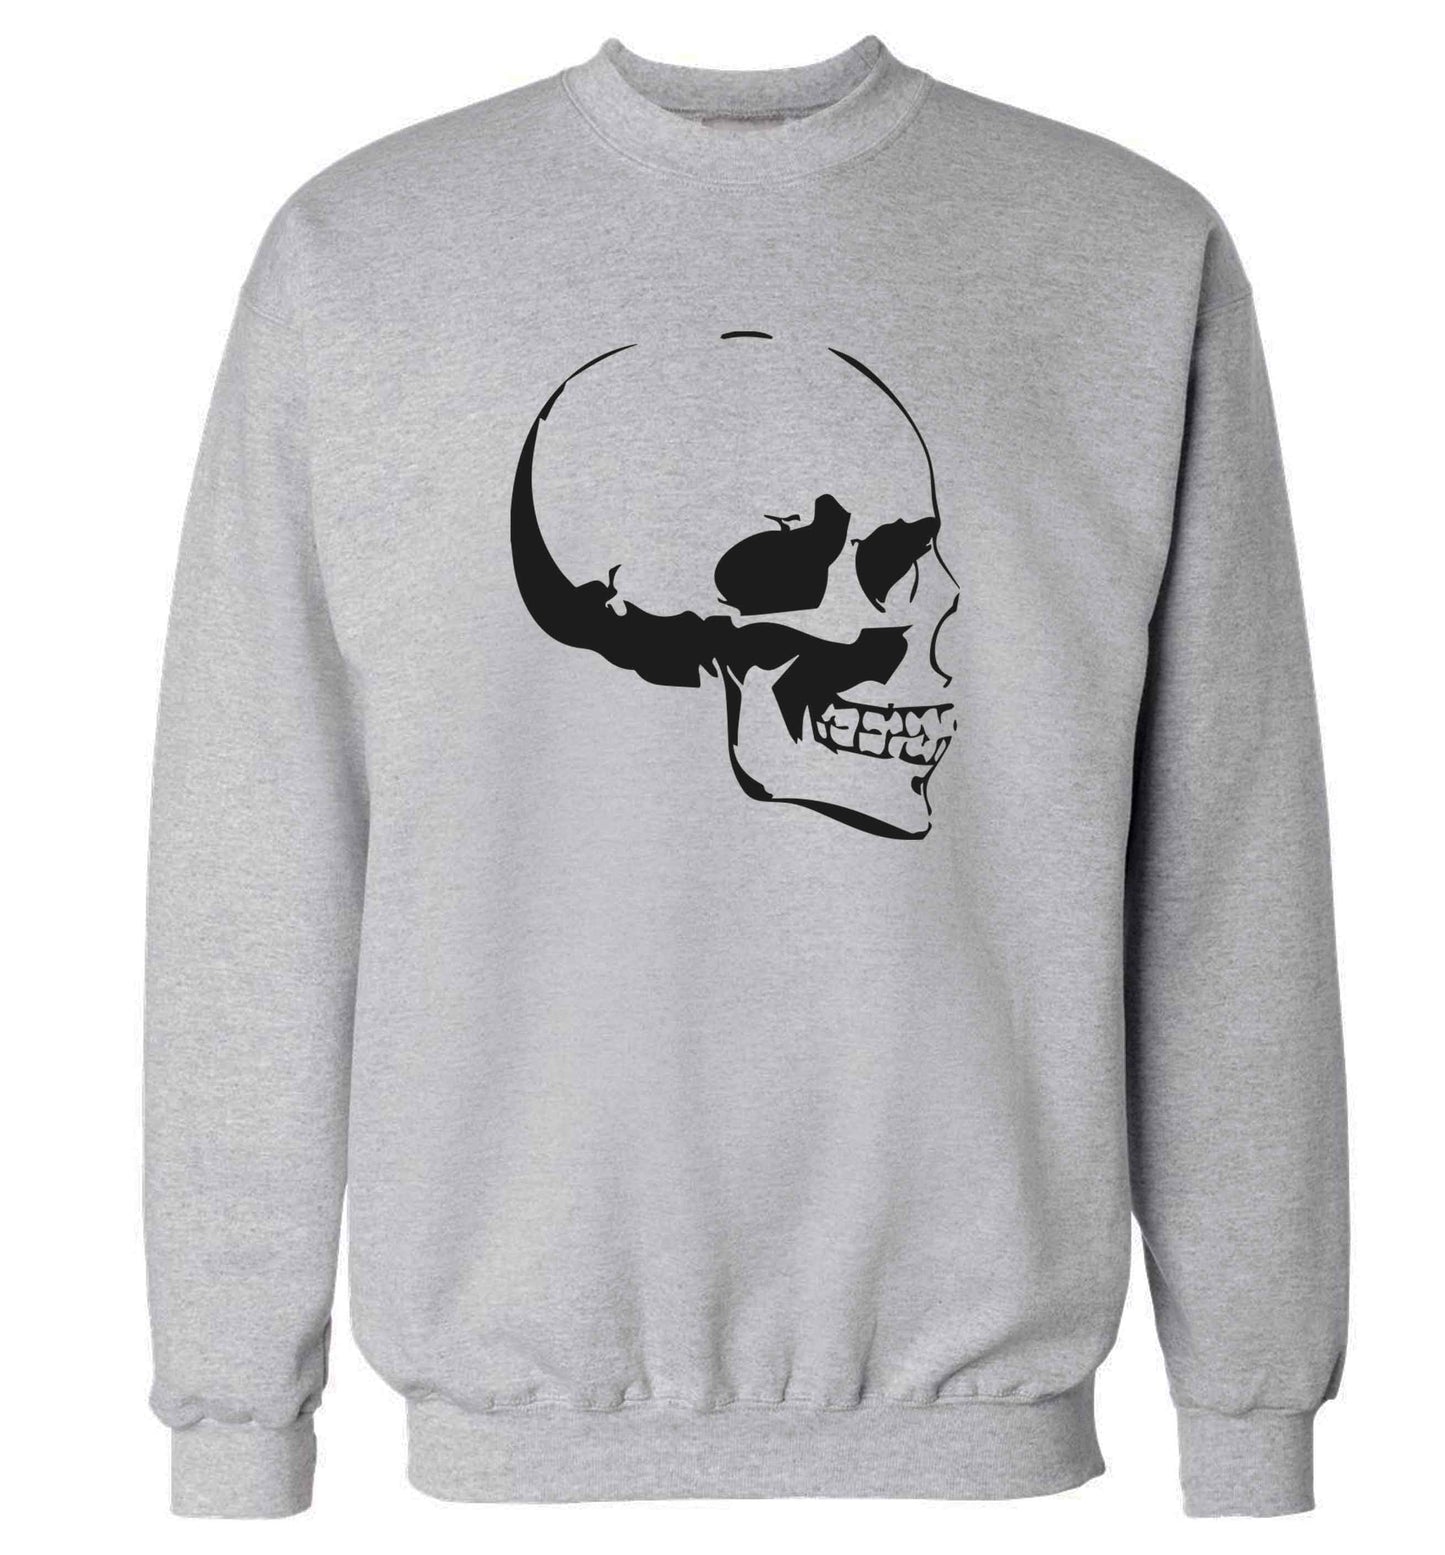 Personalised Skull Halloween adult's unisex grey sweater 2XL